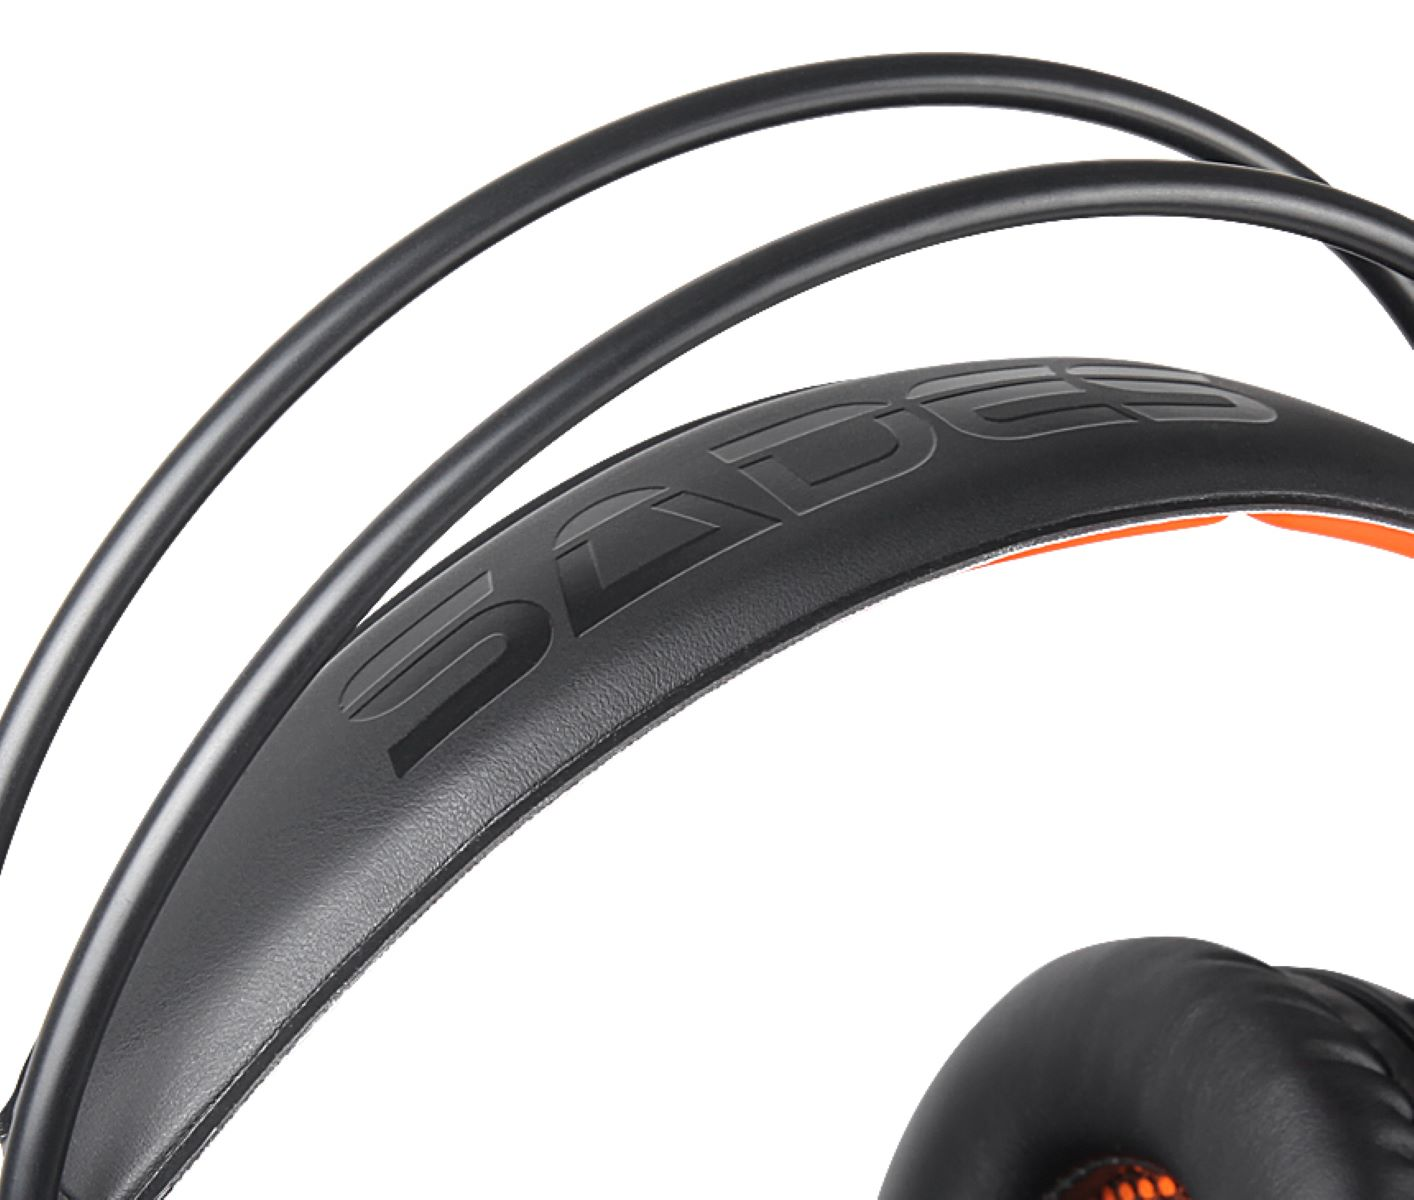 SADES Gaming A6, Over-ear schwarz/orange Headset